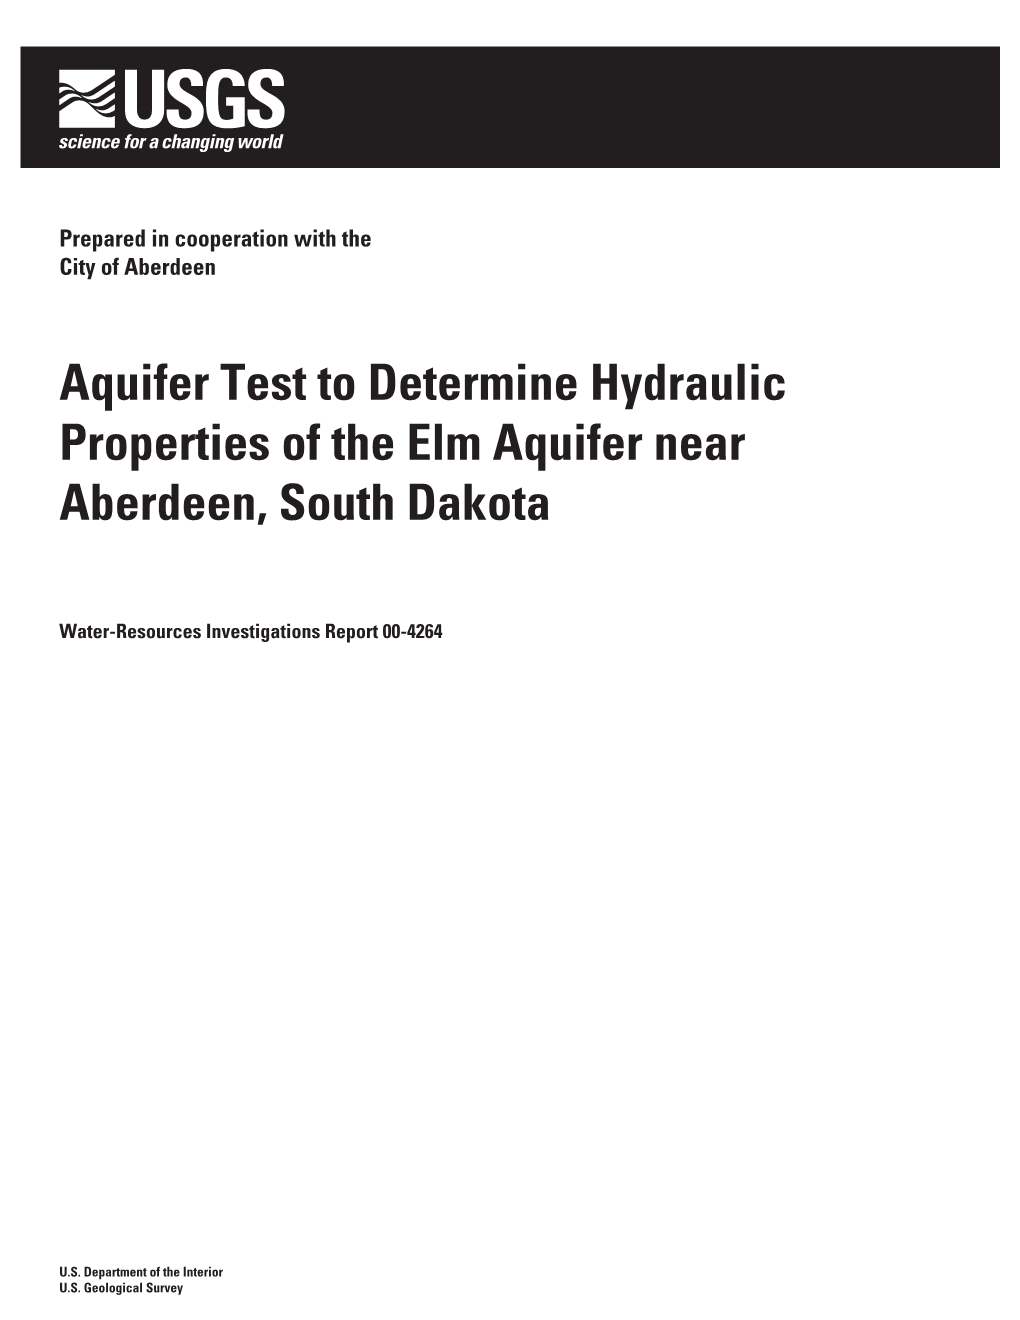 Aquifer Test to Determine Hydraulic Properties of the Elm Aquifer Near Aberdeen, South Dakota